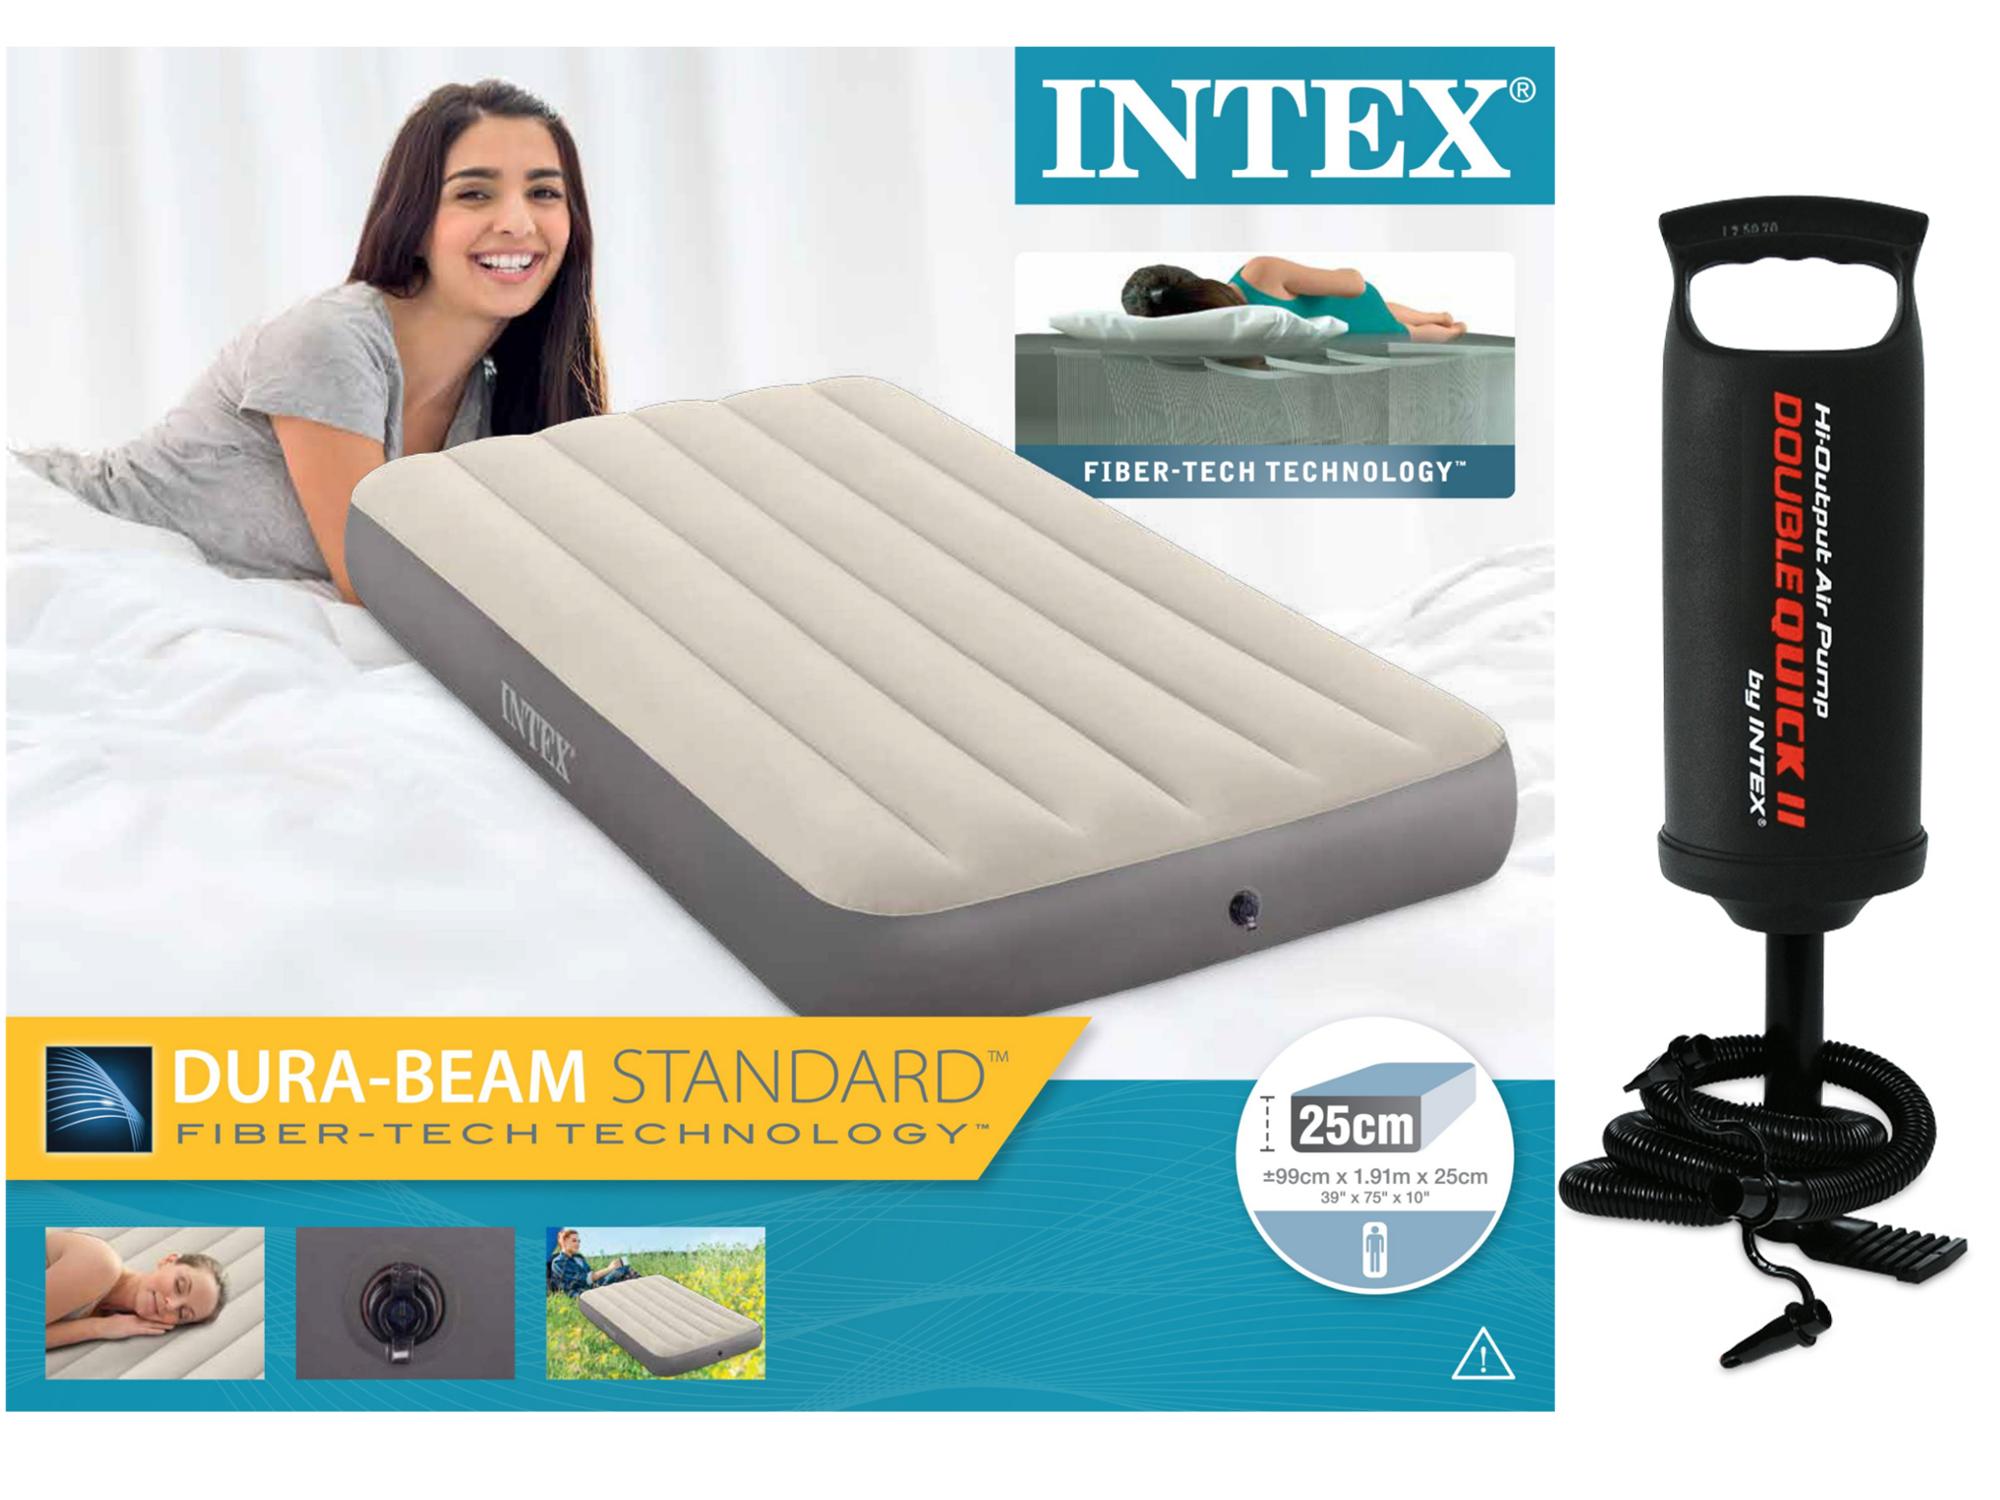 Intex Philippines Intex price list Pool Bean Bag & Air Bed for